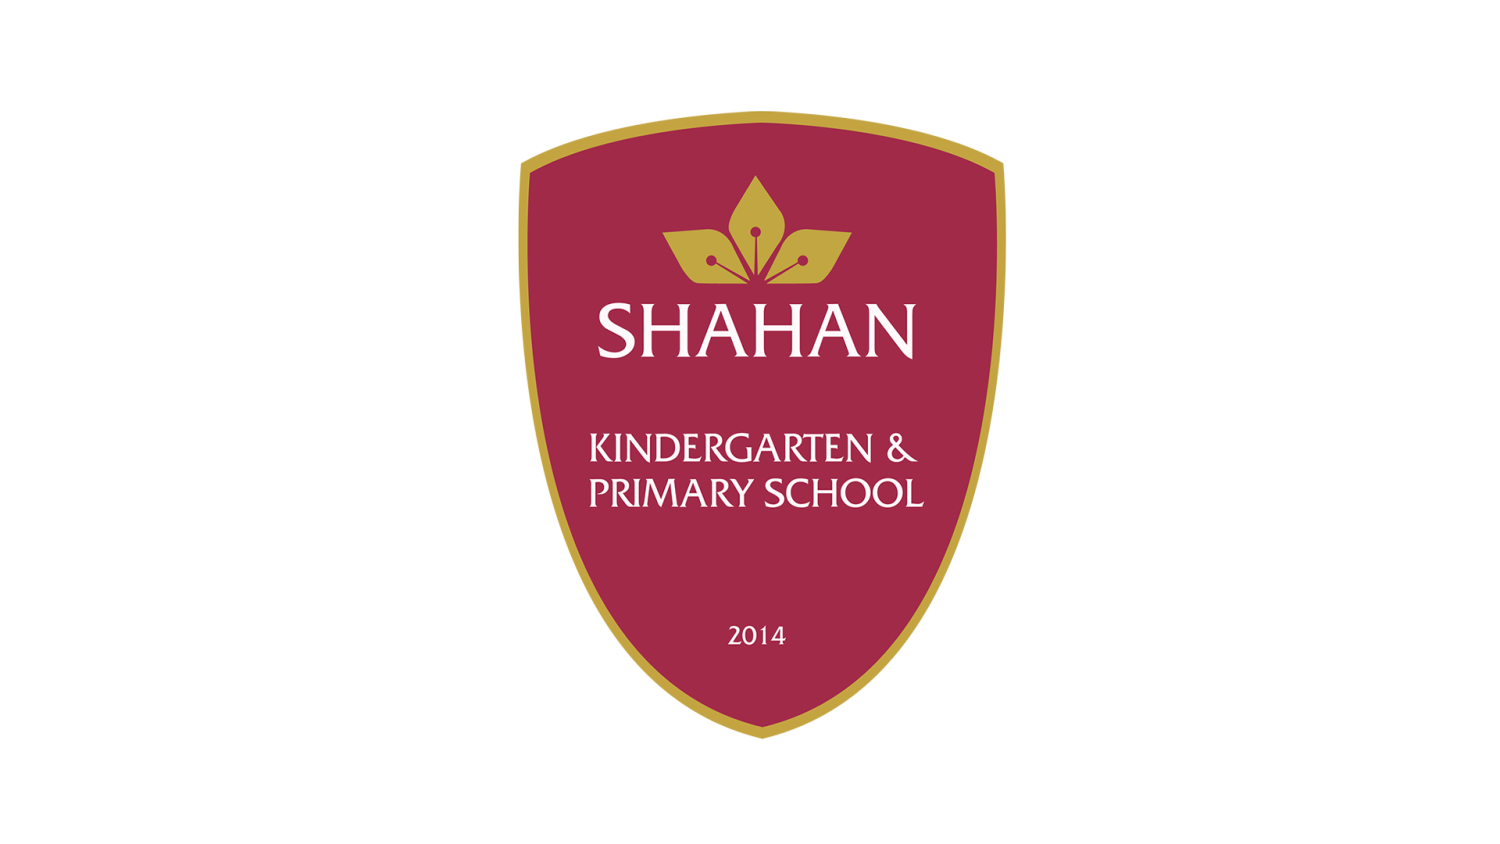 Shahan Kindergarten